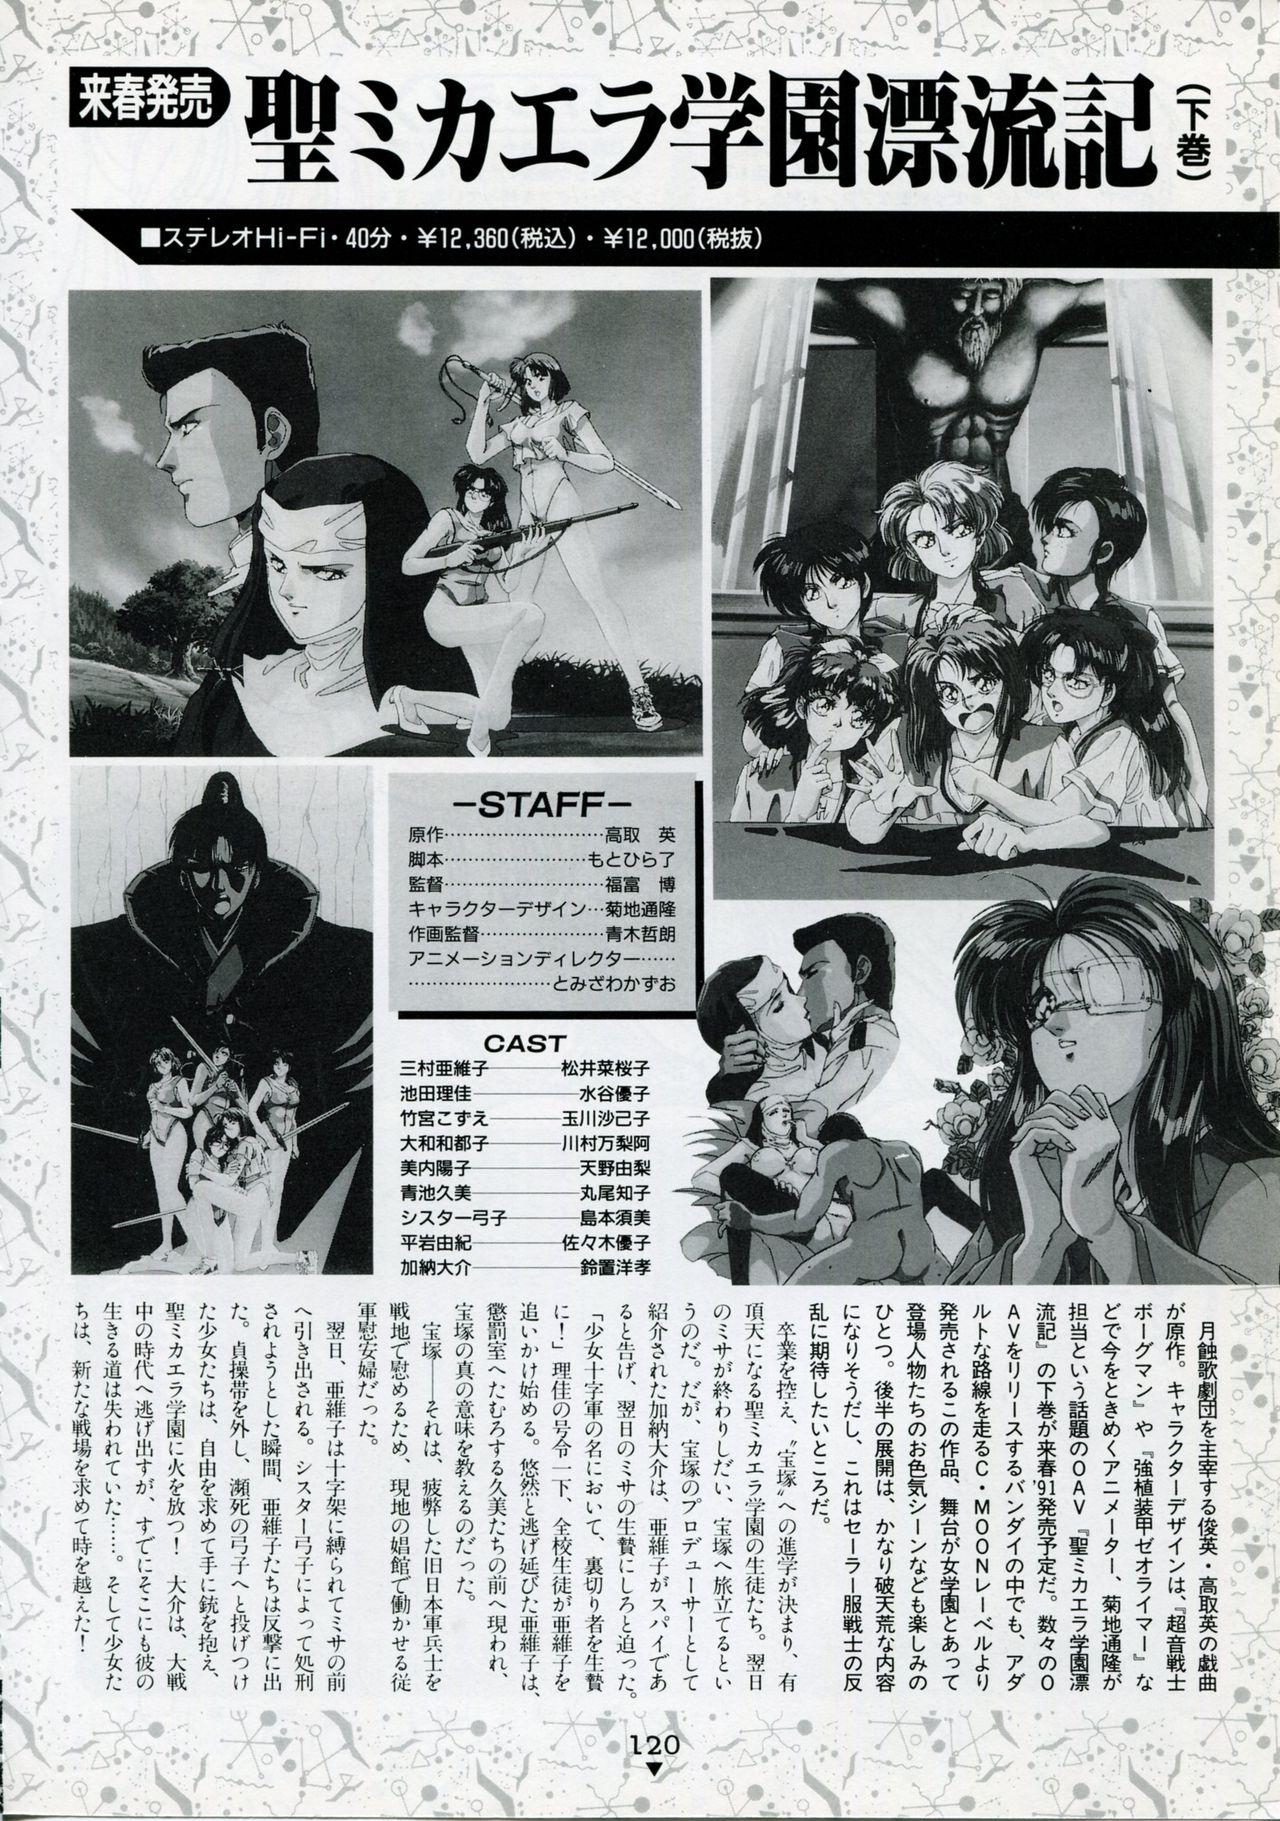 Bishoujo Anime Daizenshuu - Adult Animation Video Catalog 1991 115